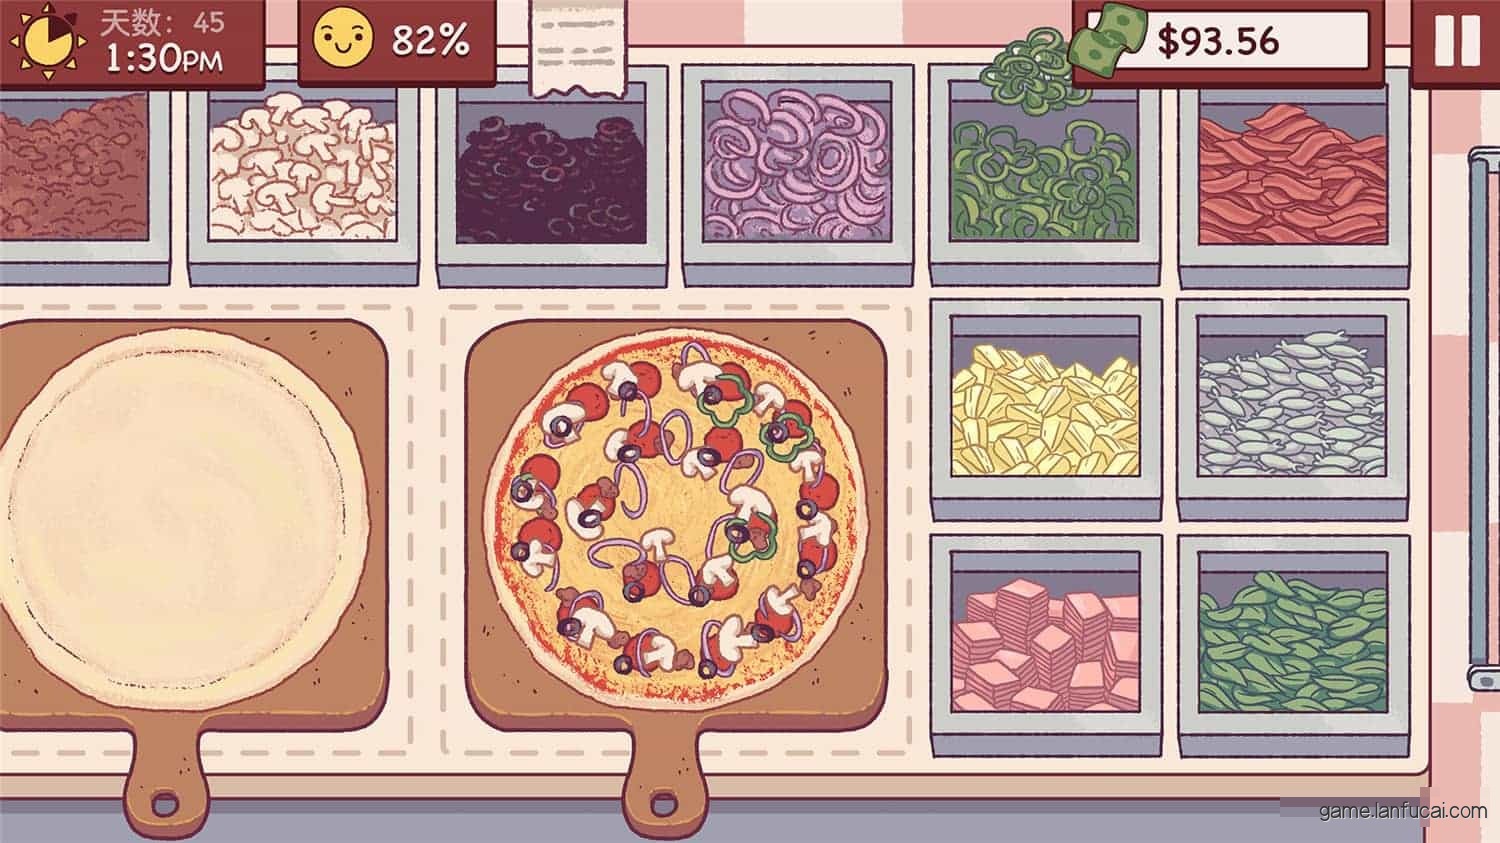 可口的披萨，美味的披萨/Good Pizza, Great Pizza5